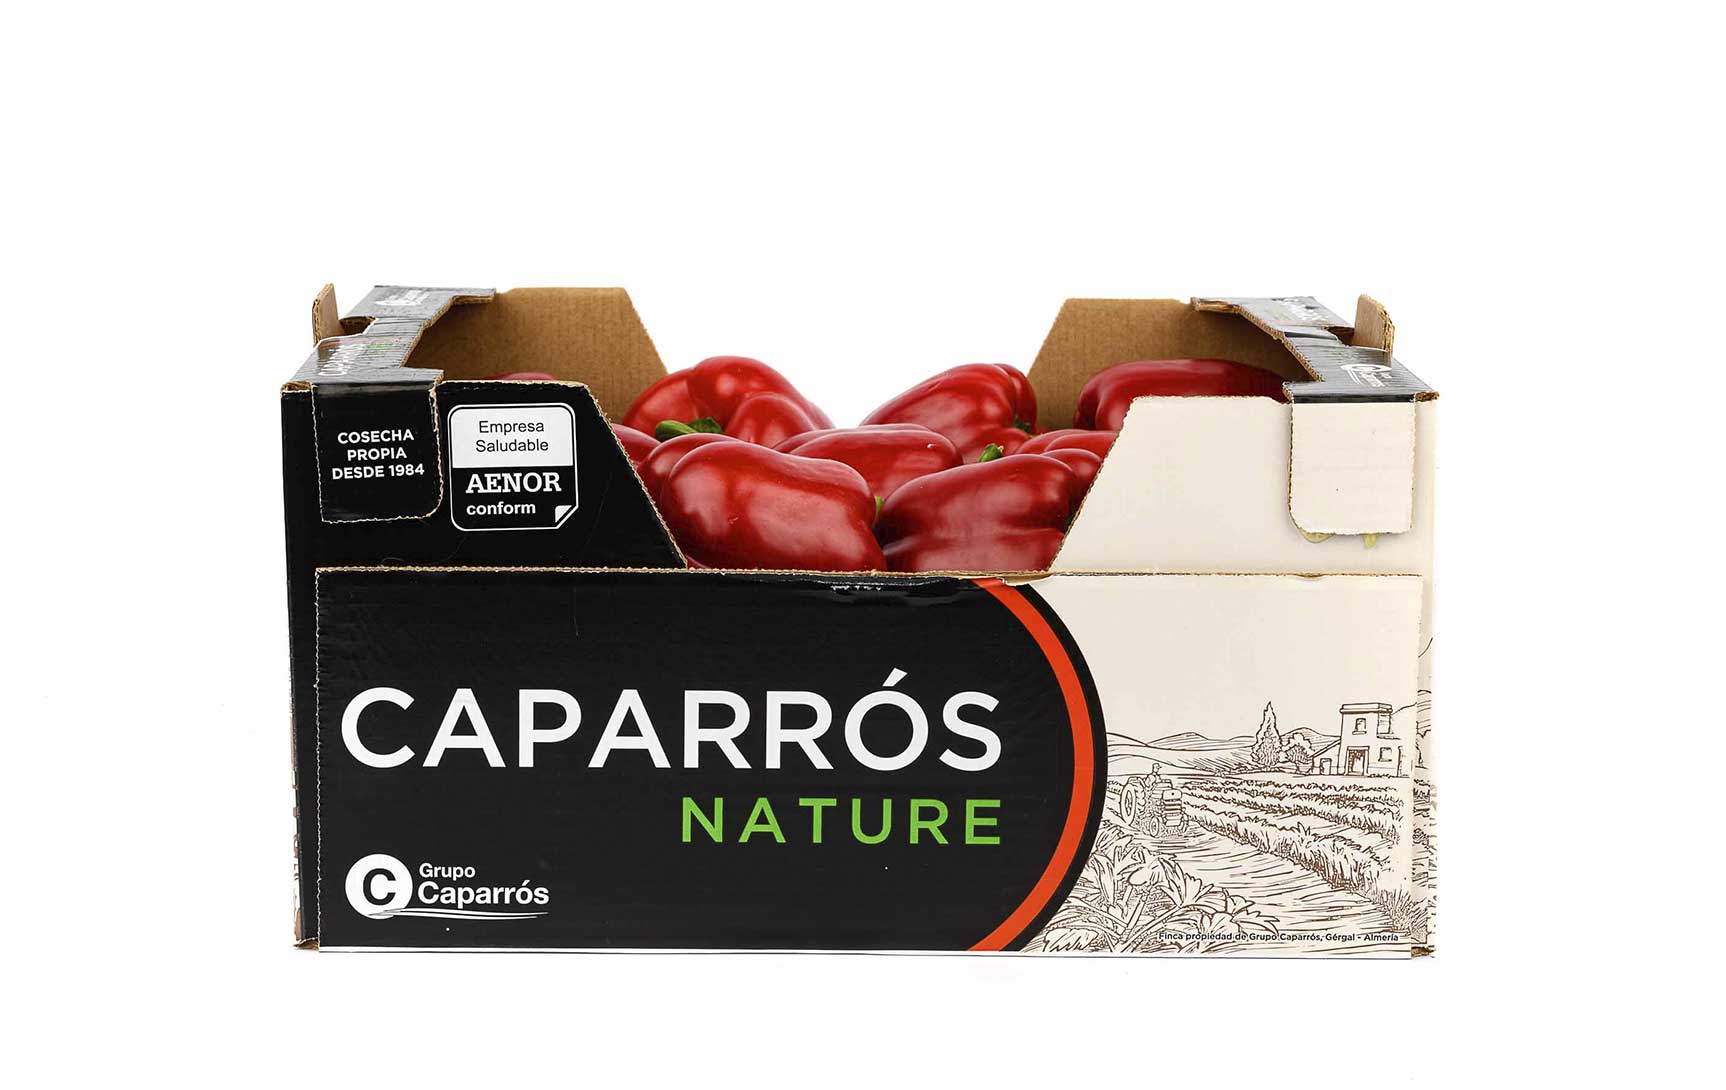 Red california pepper - Caparrós